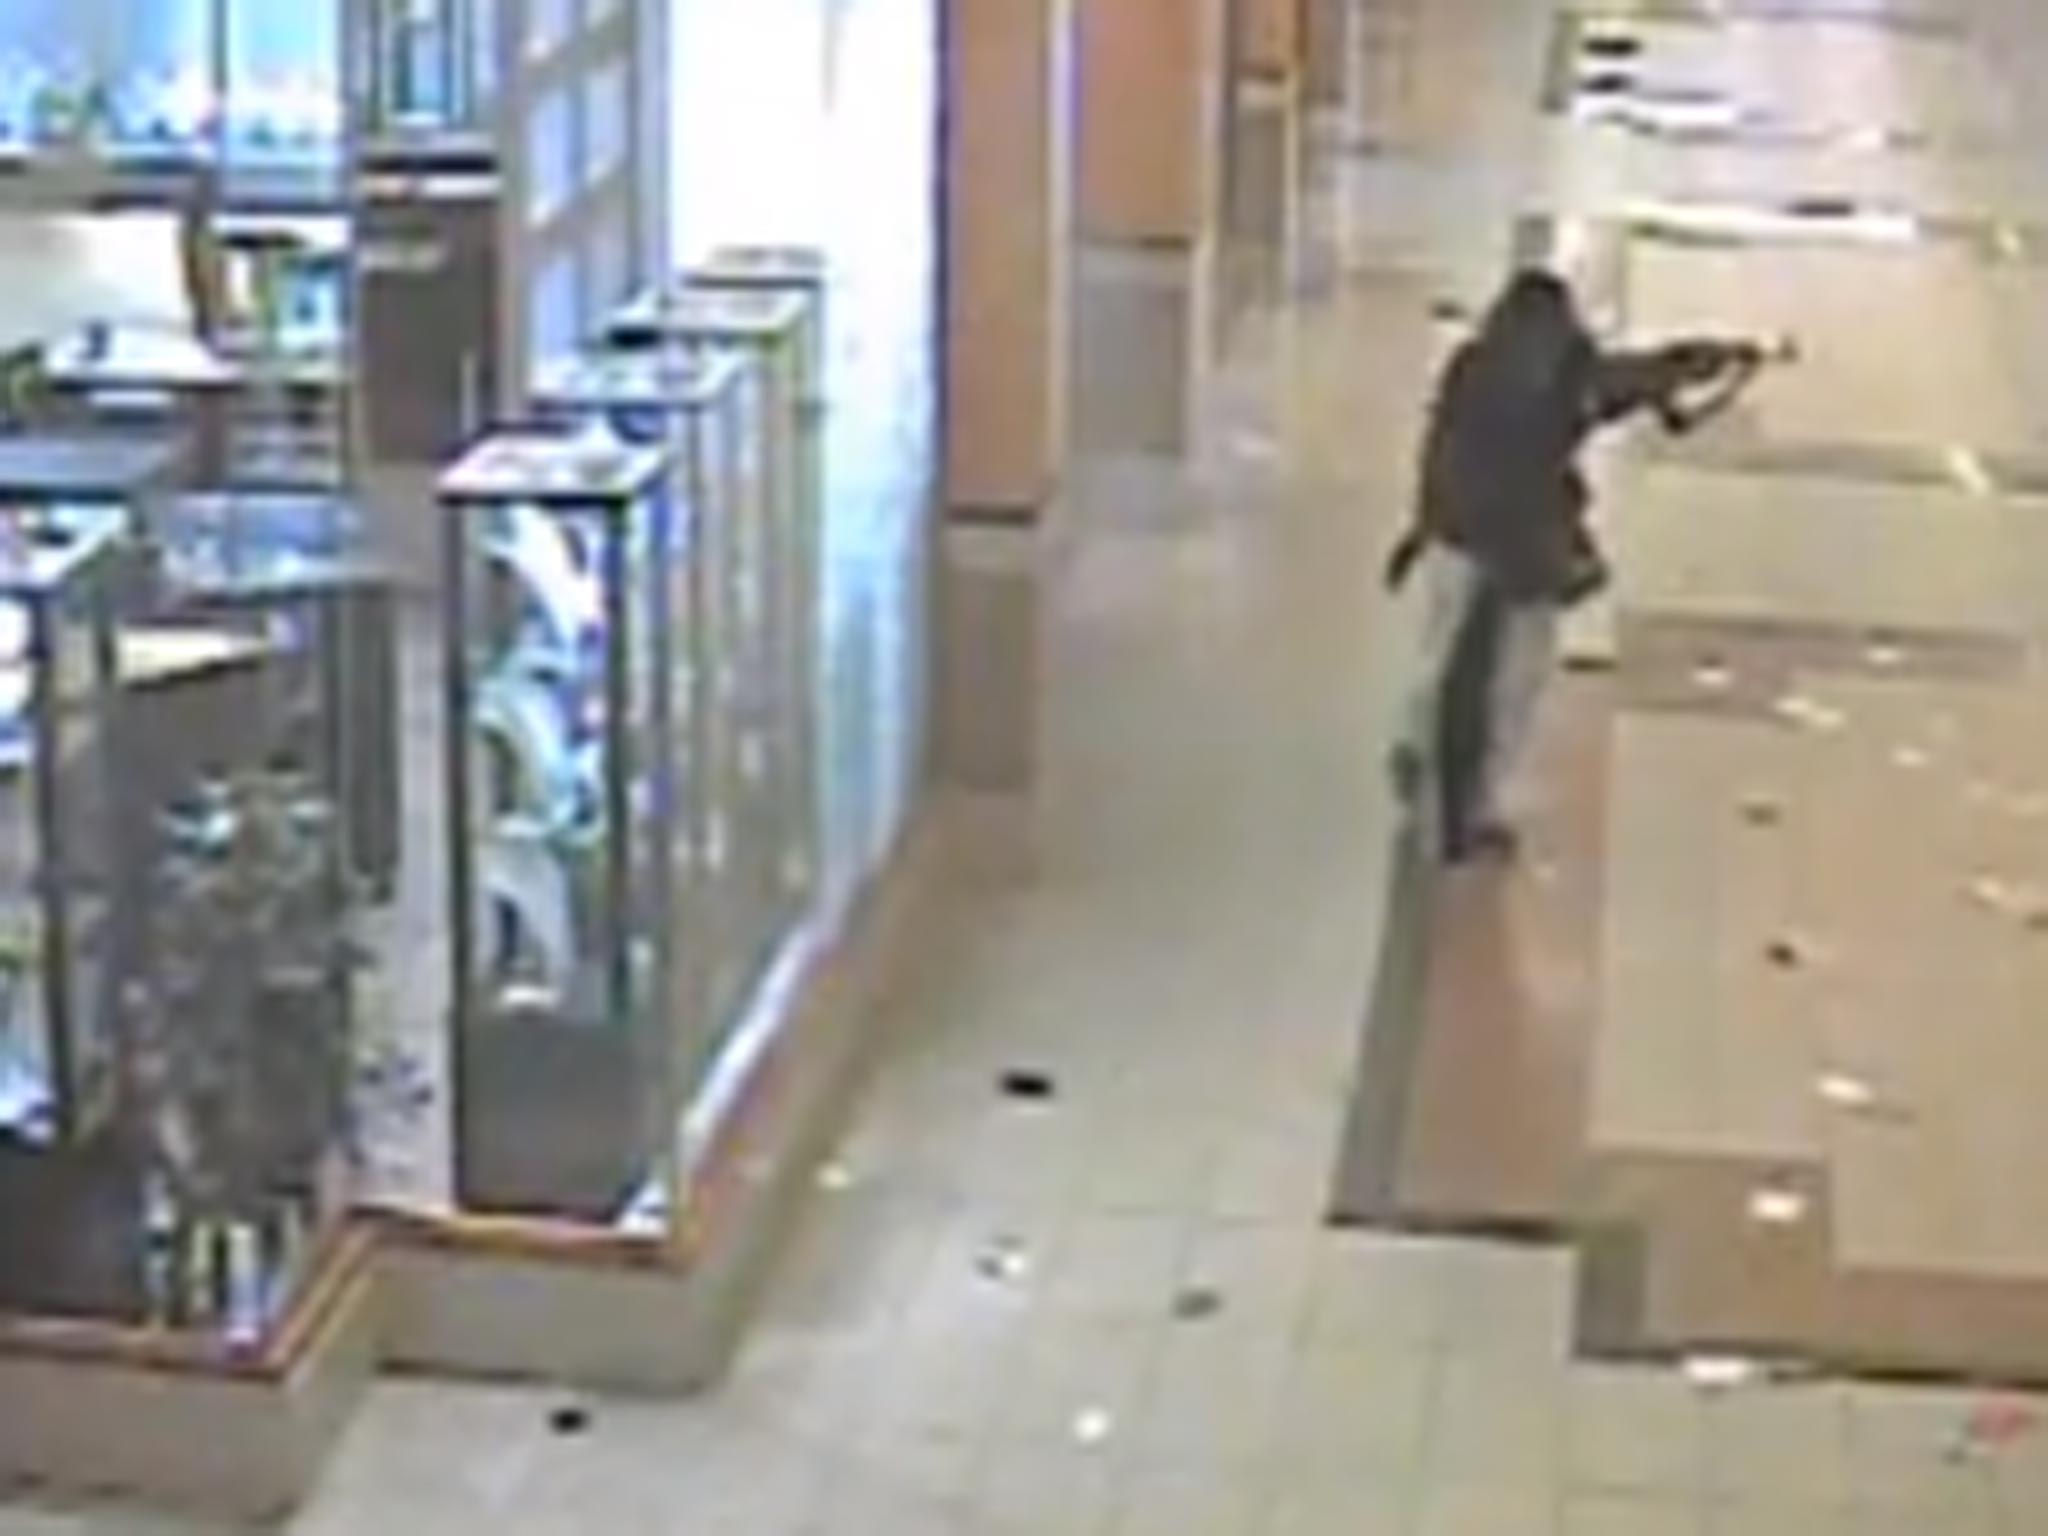 A gunman walks through the corridors of the mall